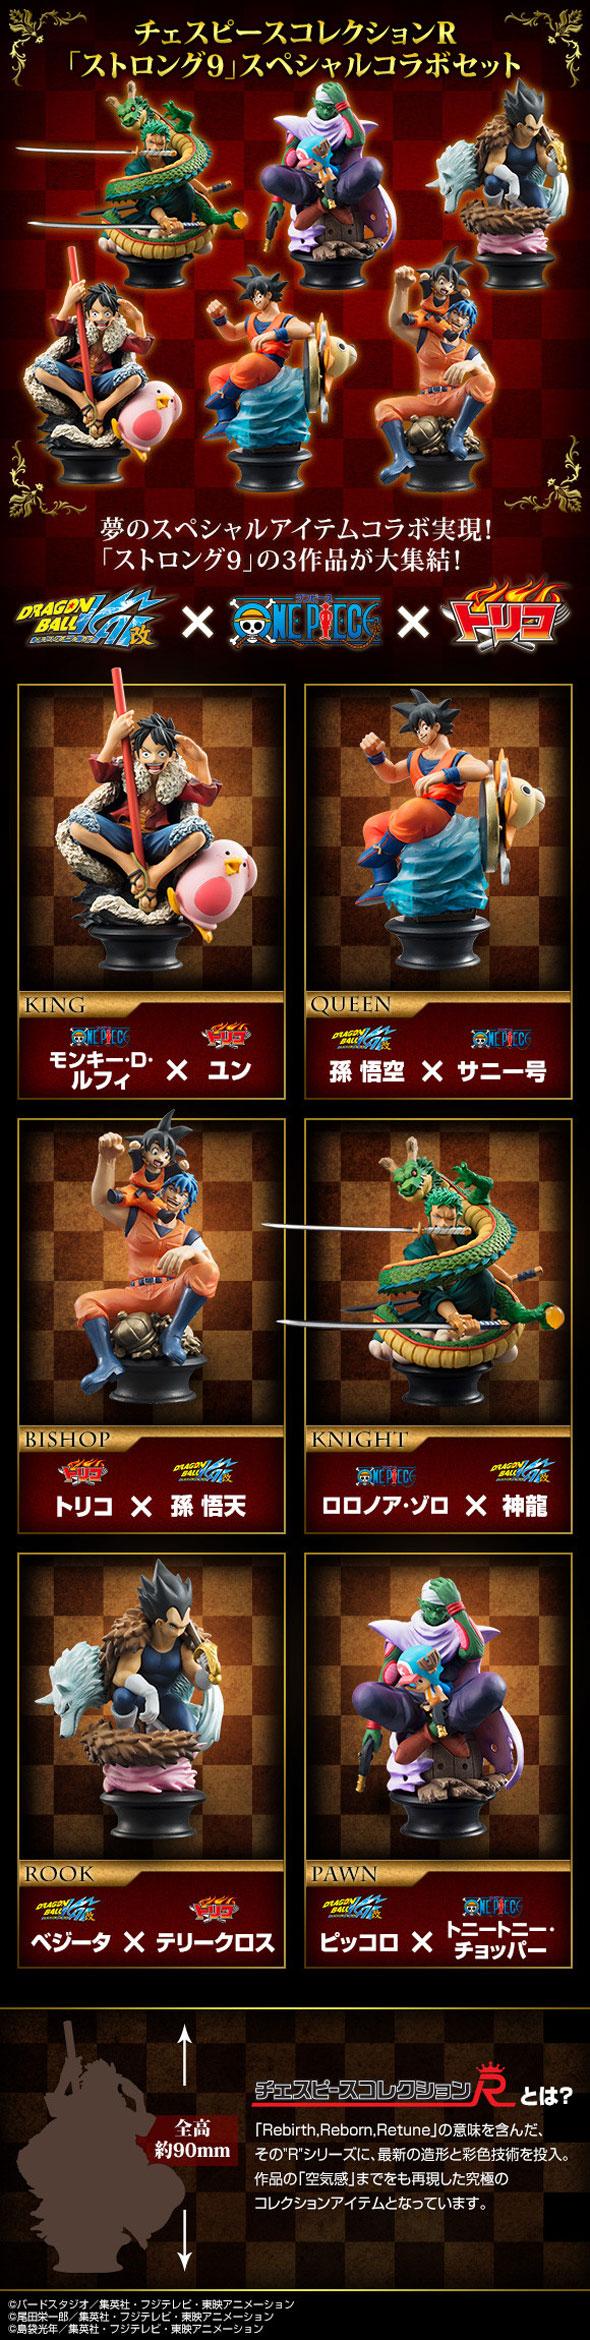 One-piece-dragon-ball-toriko-xadrez-cartaz